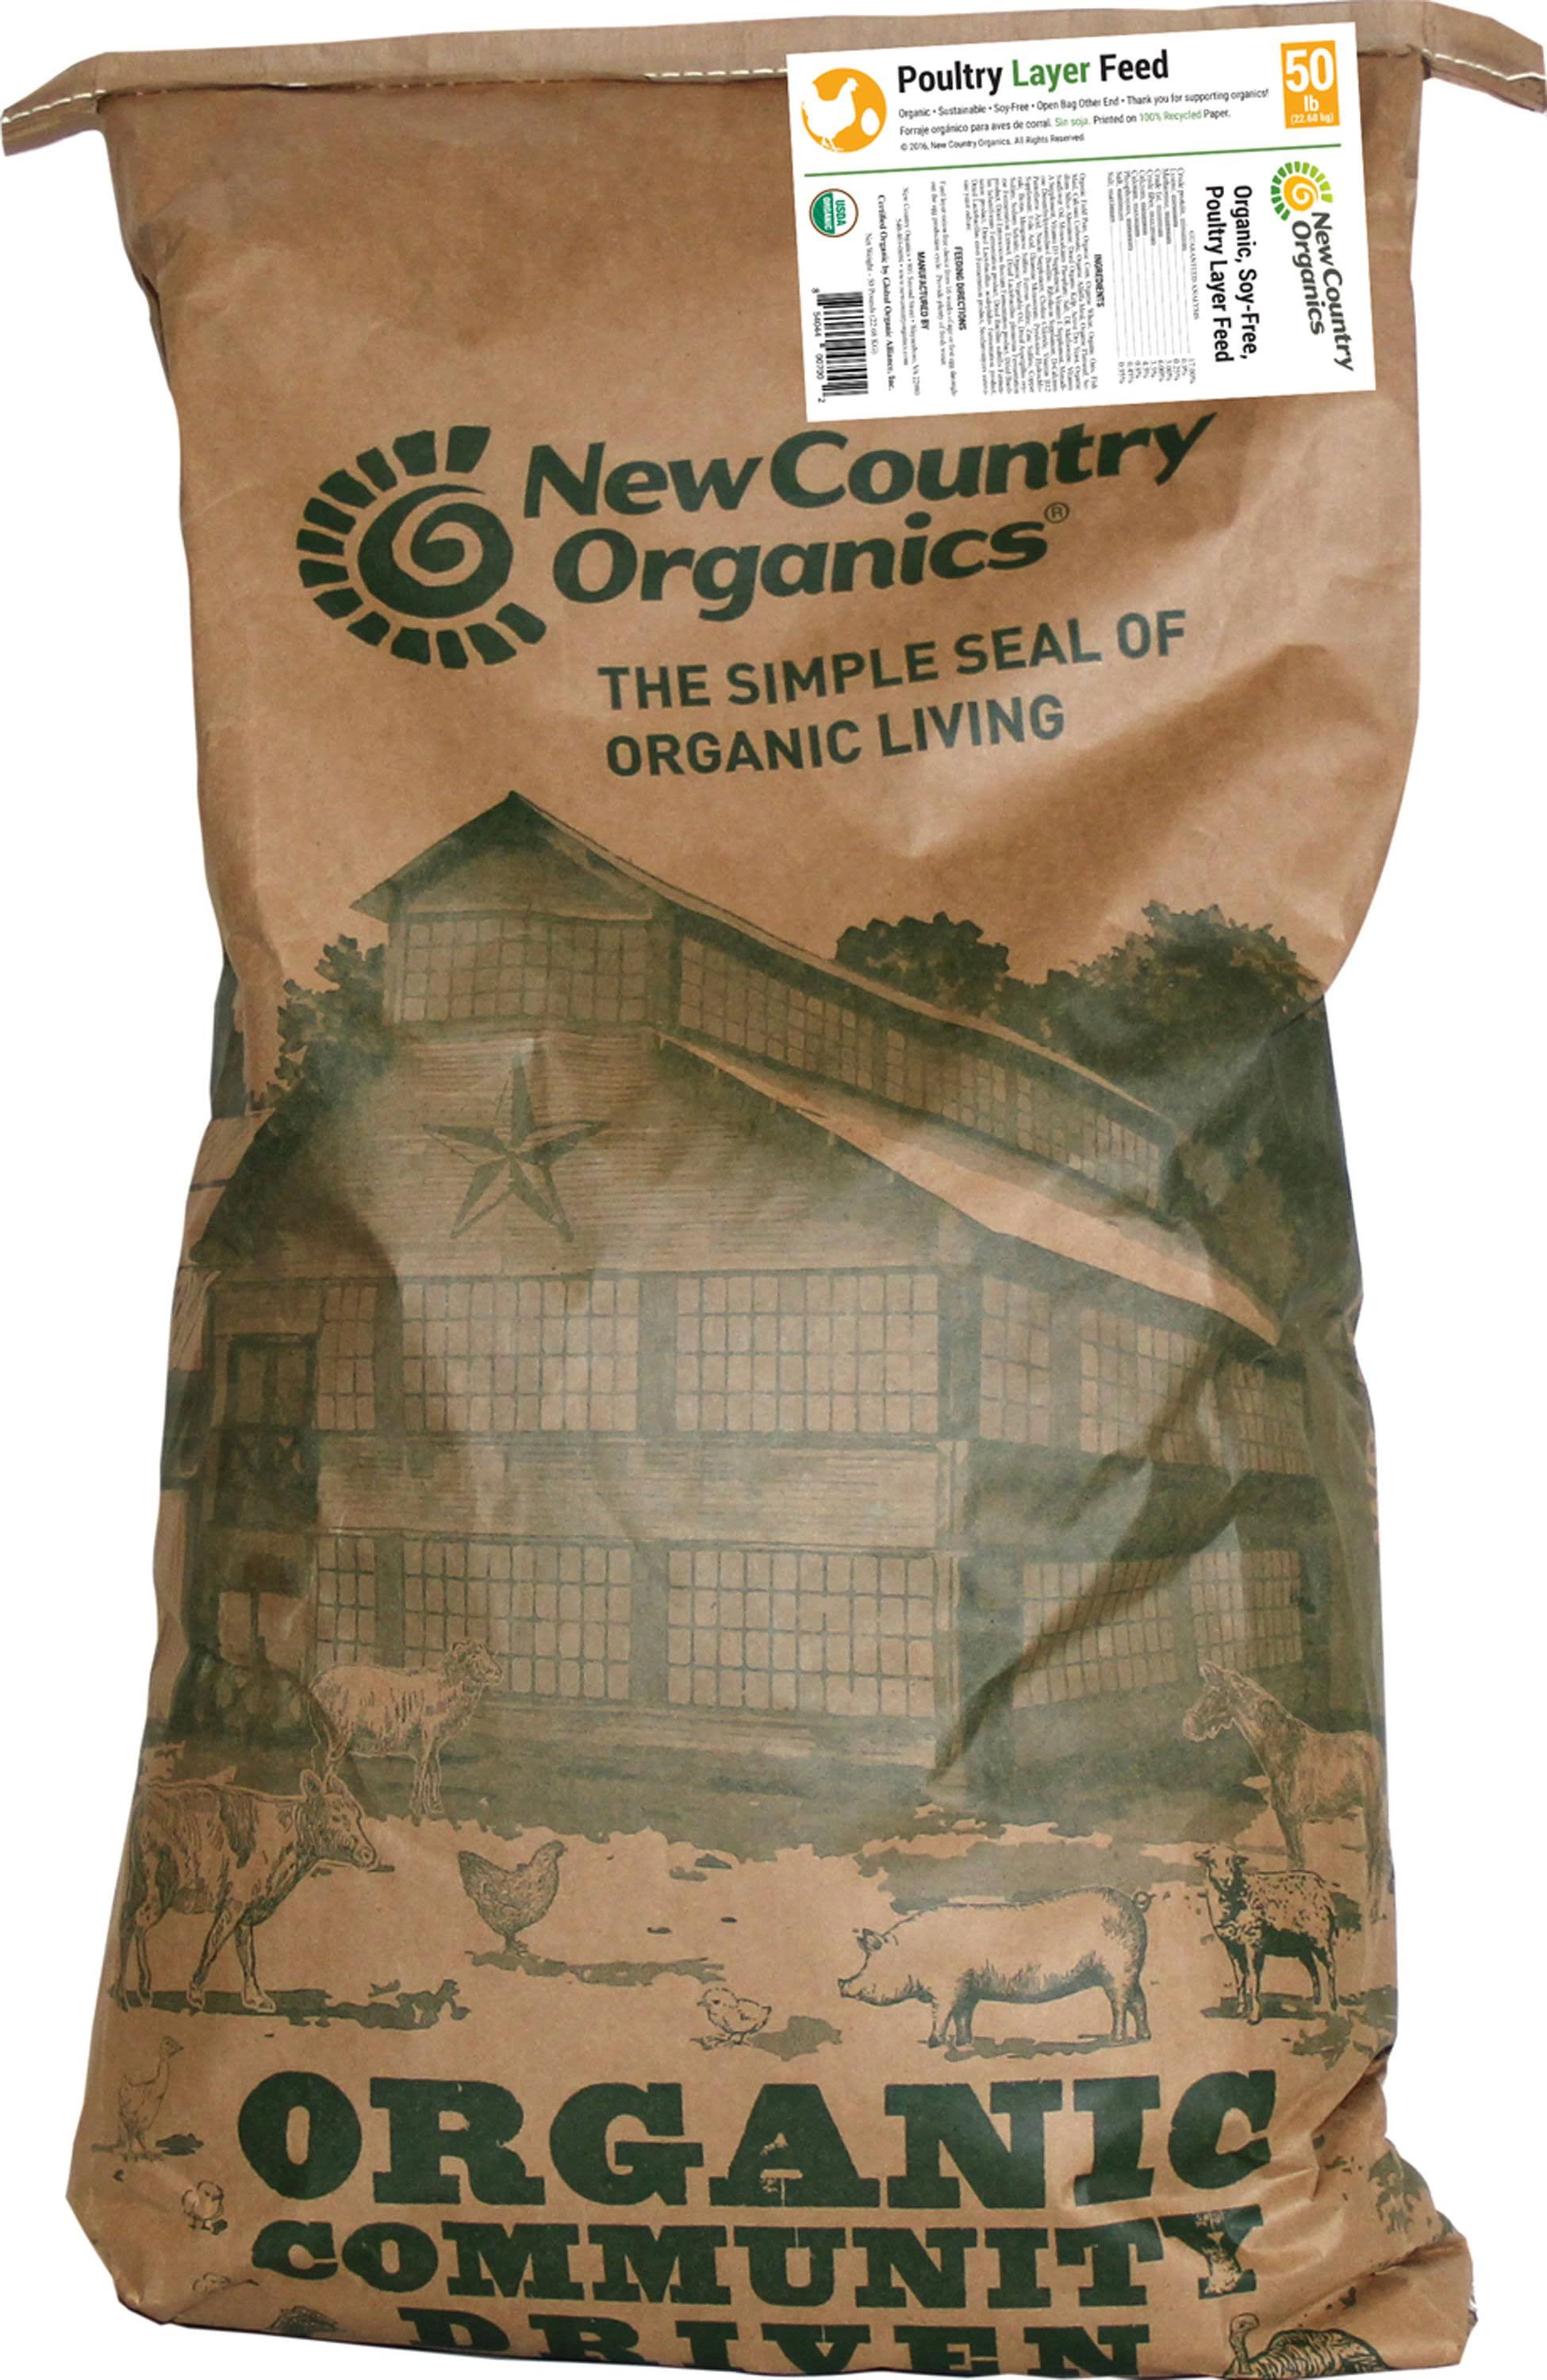 New Country Organics - Organic Layer Feed